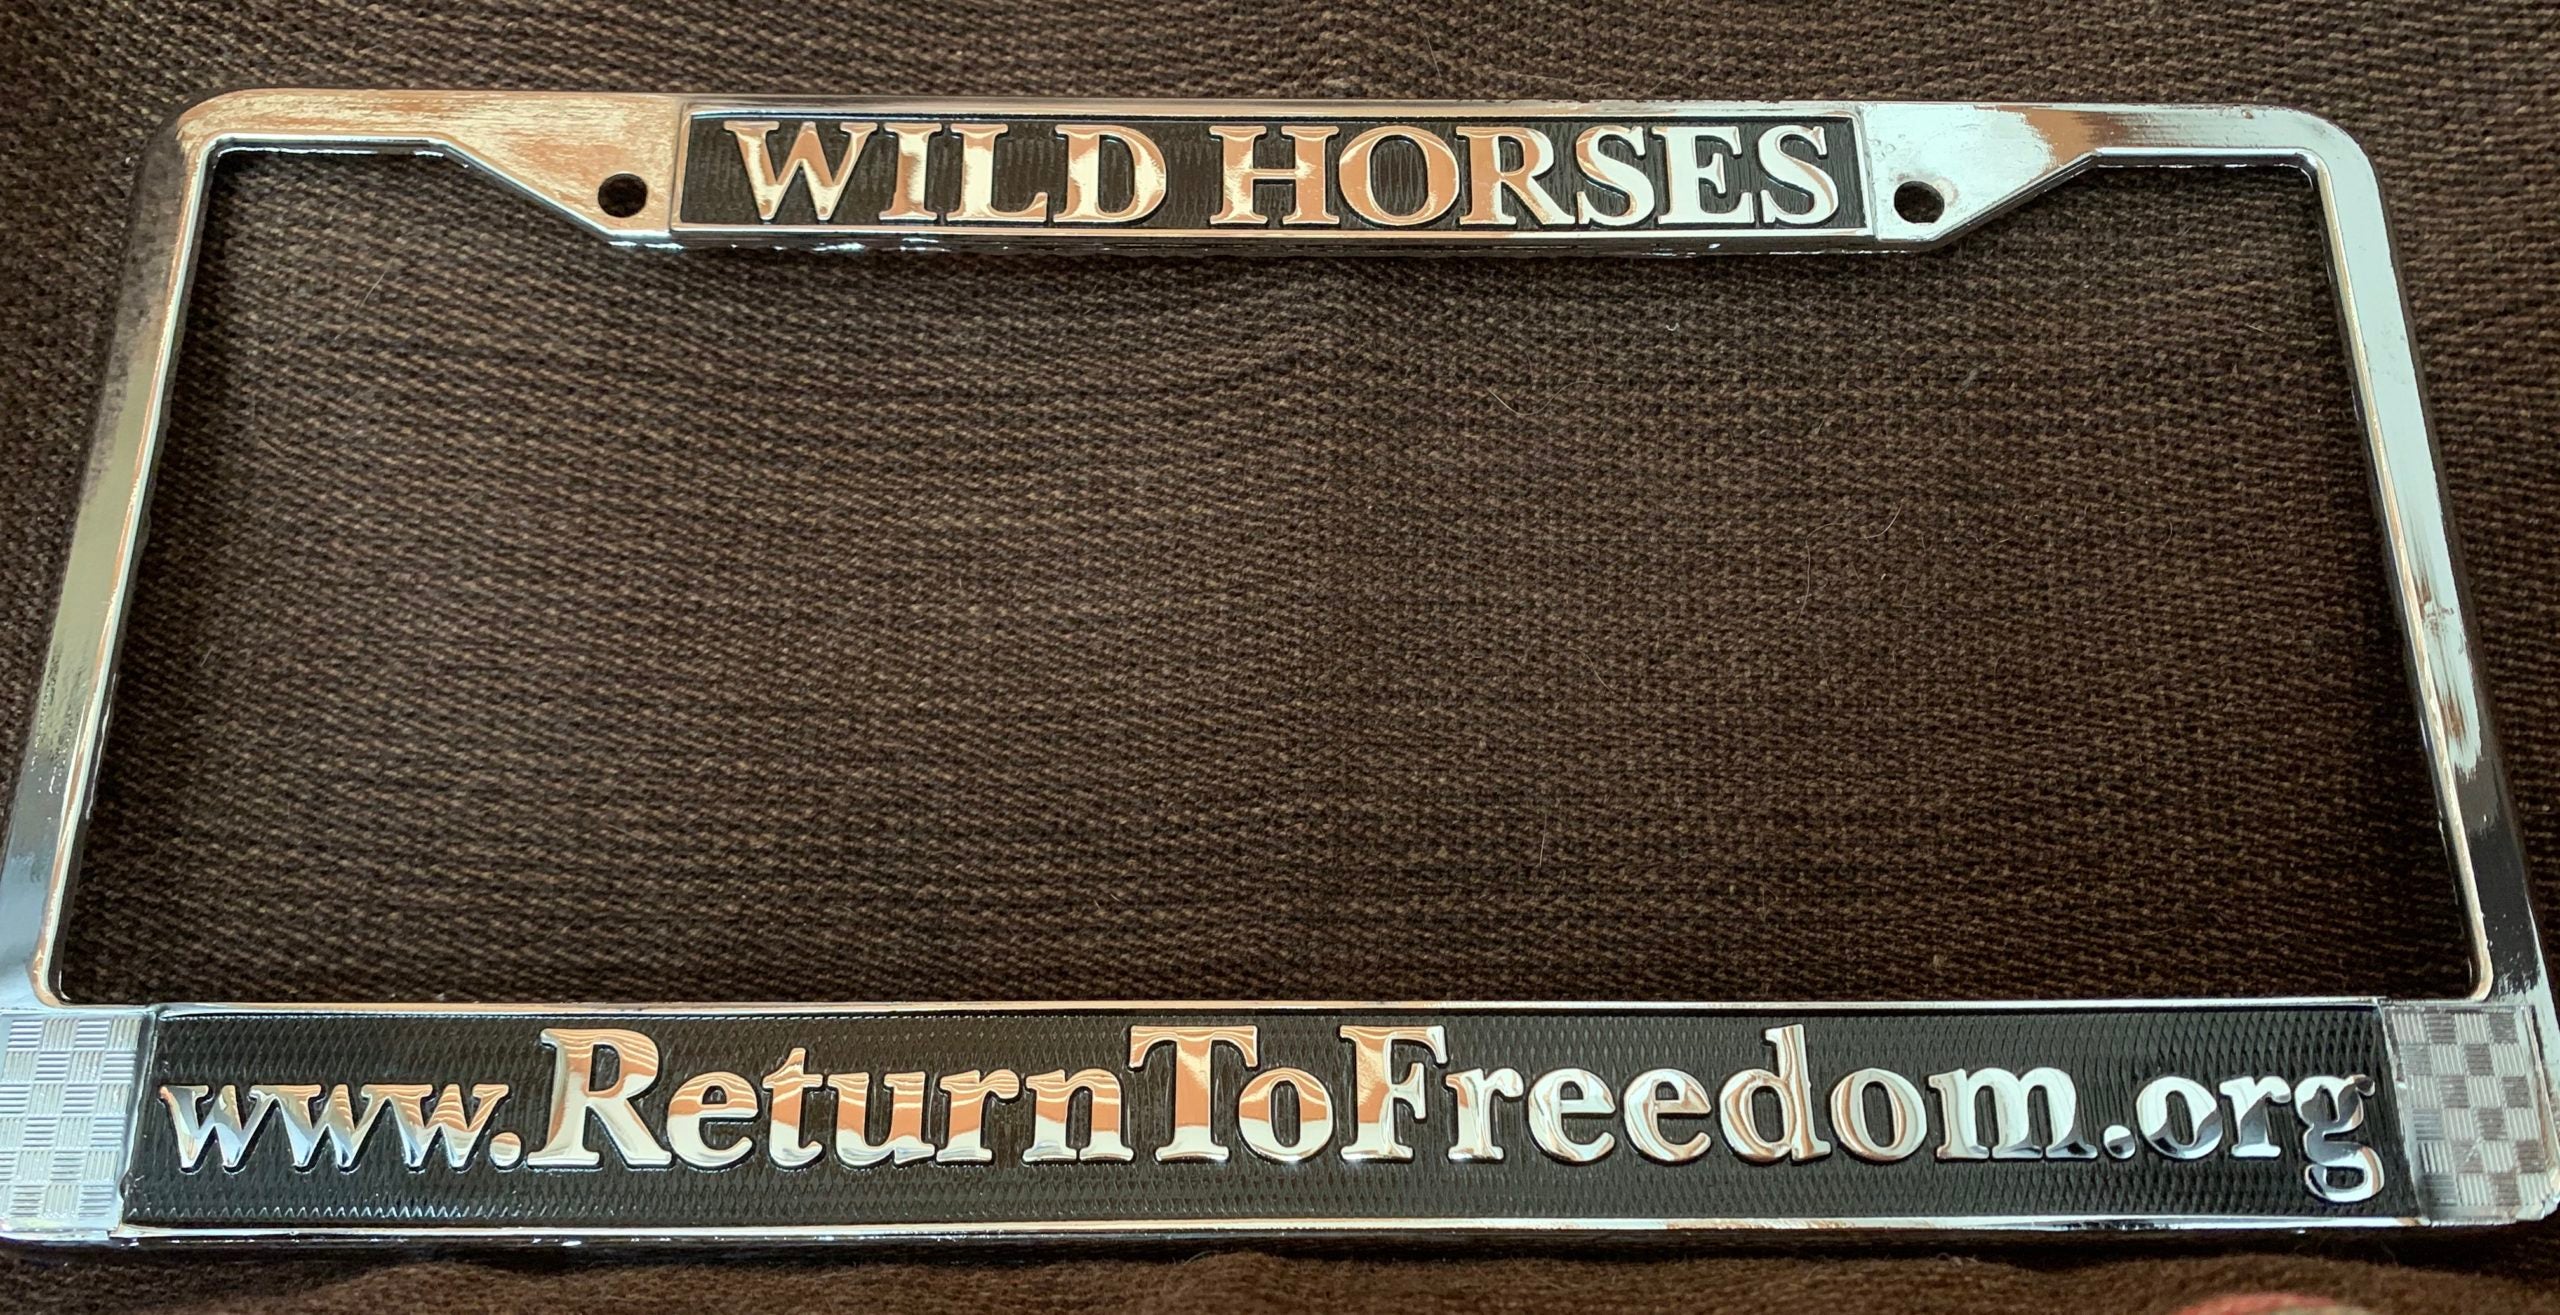 Return to Freedom License Plate Frame